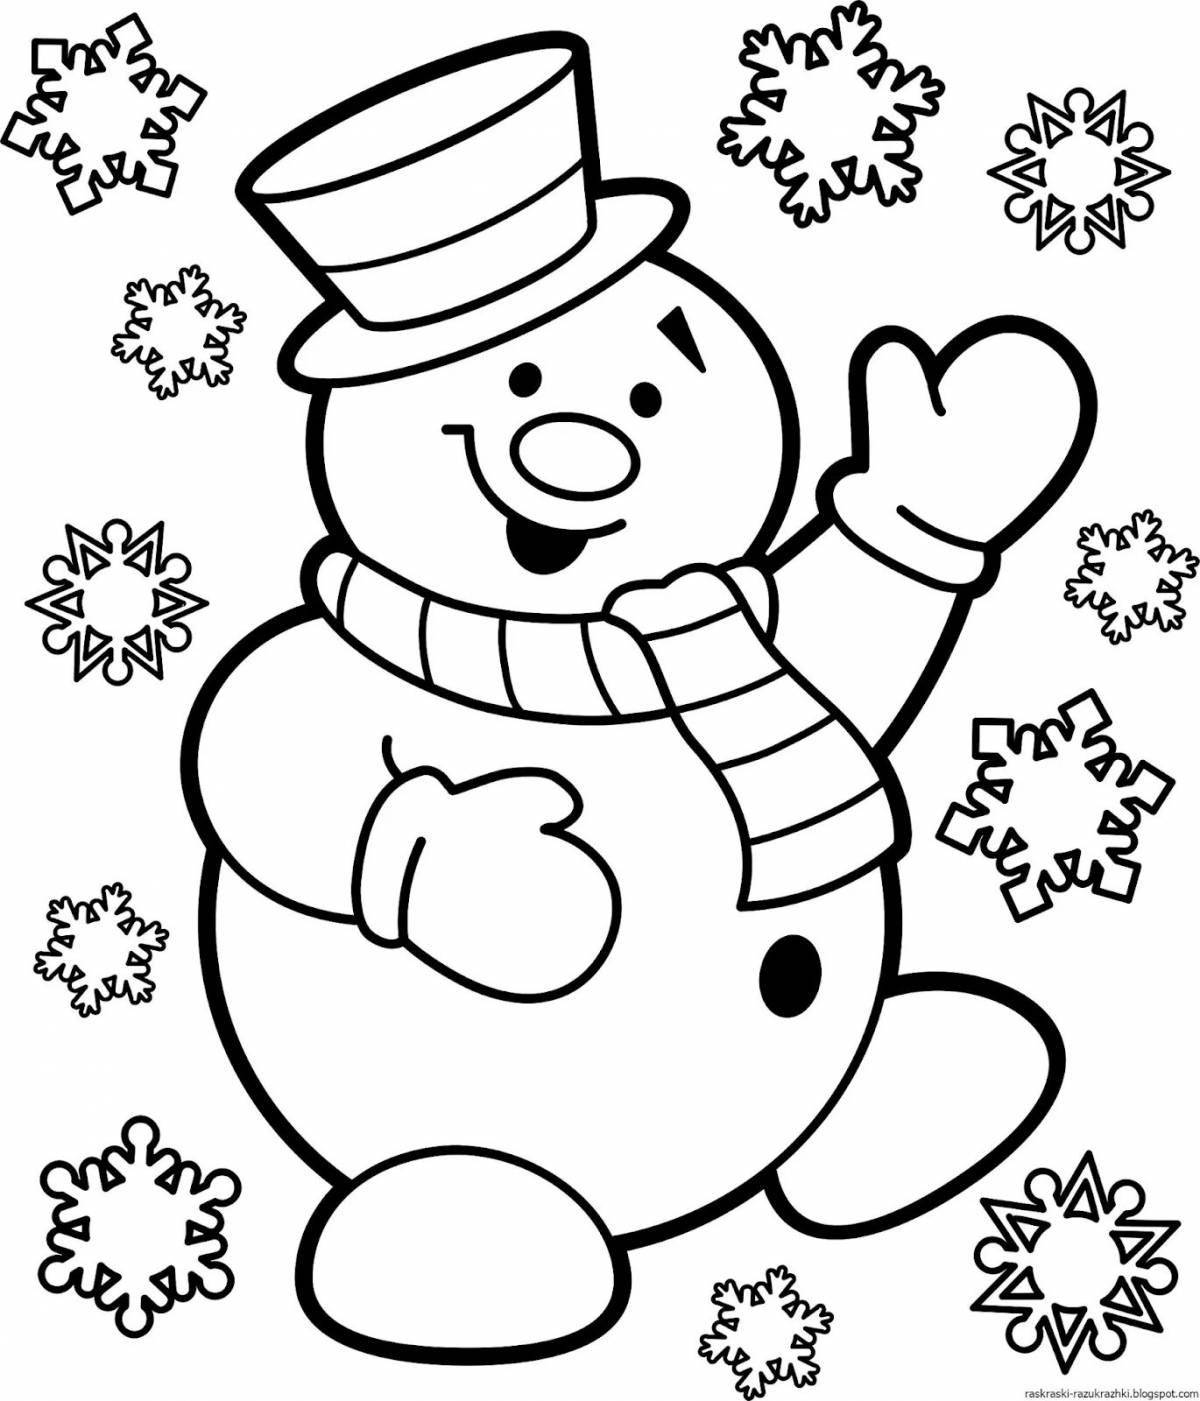 Attractive snowman coloring book